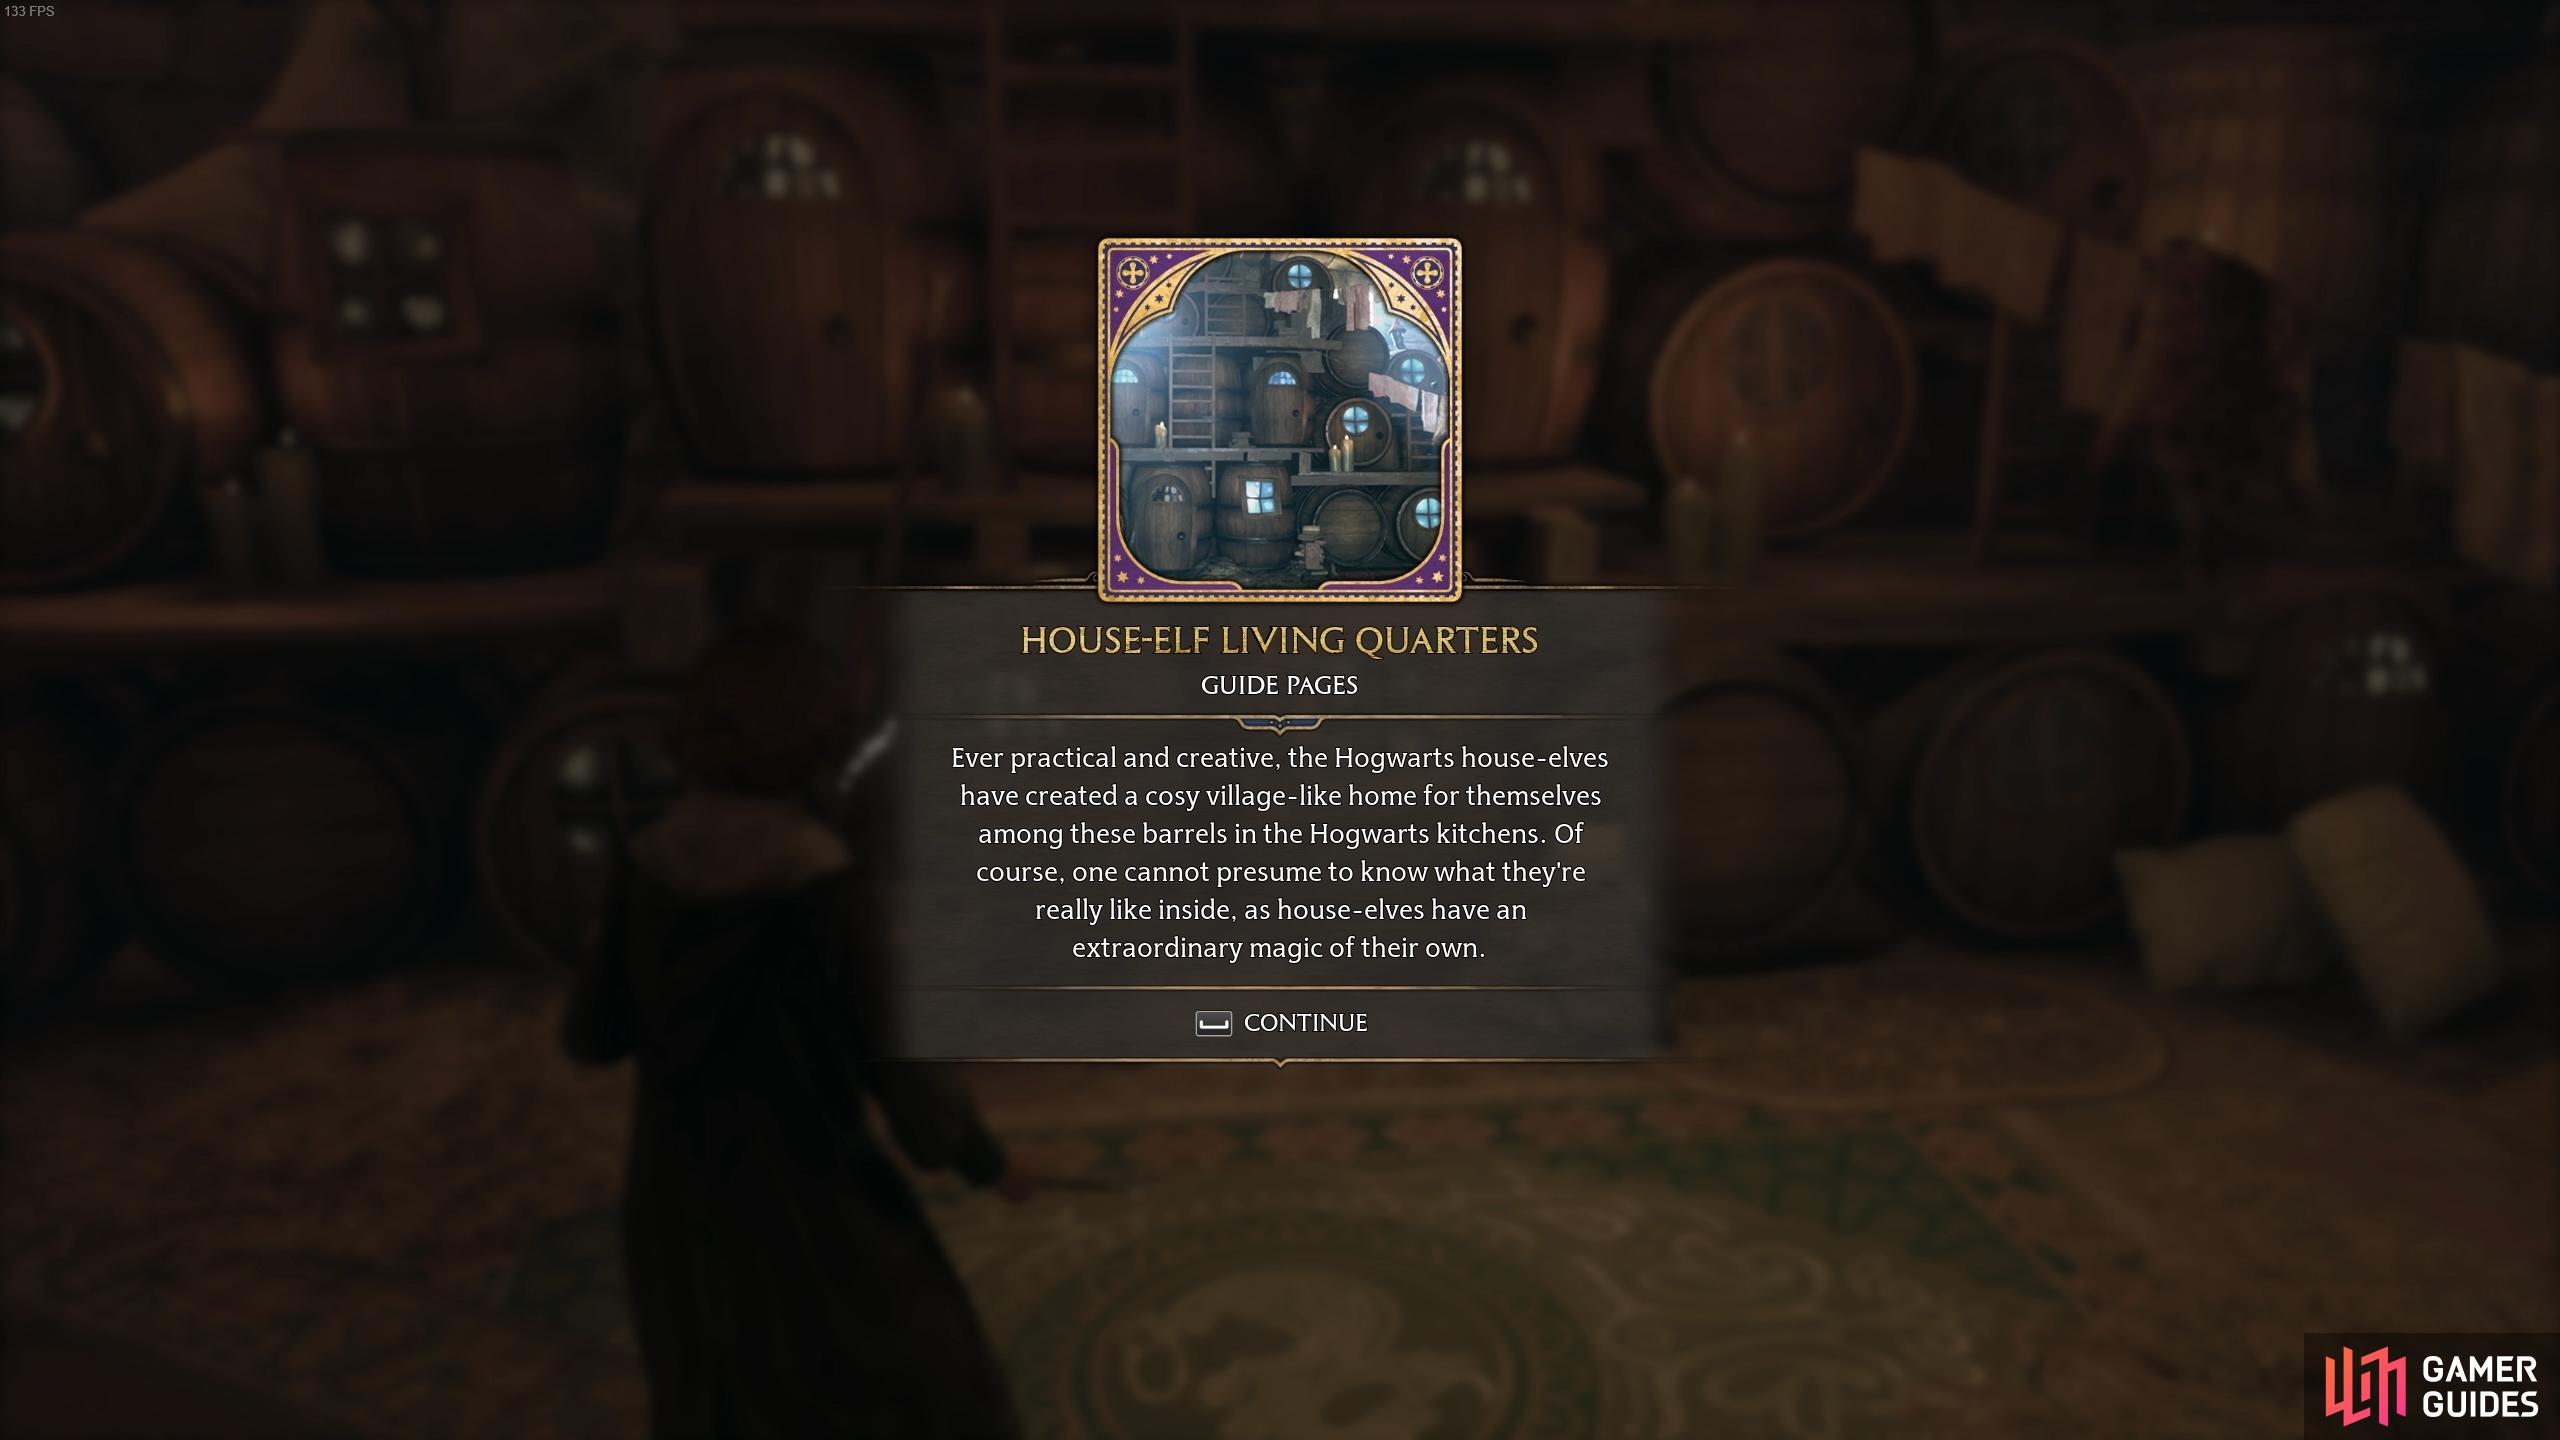 The description for the House-Elf Living Quarters page.